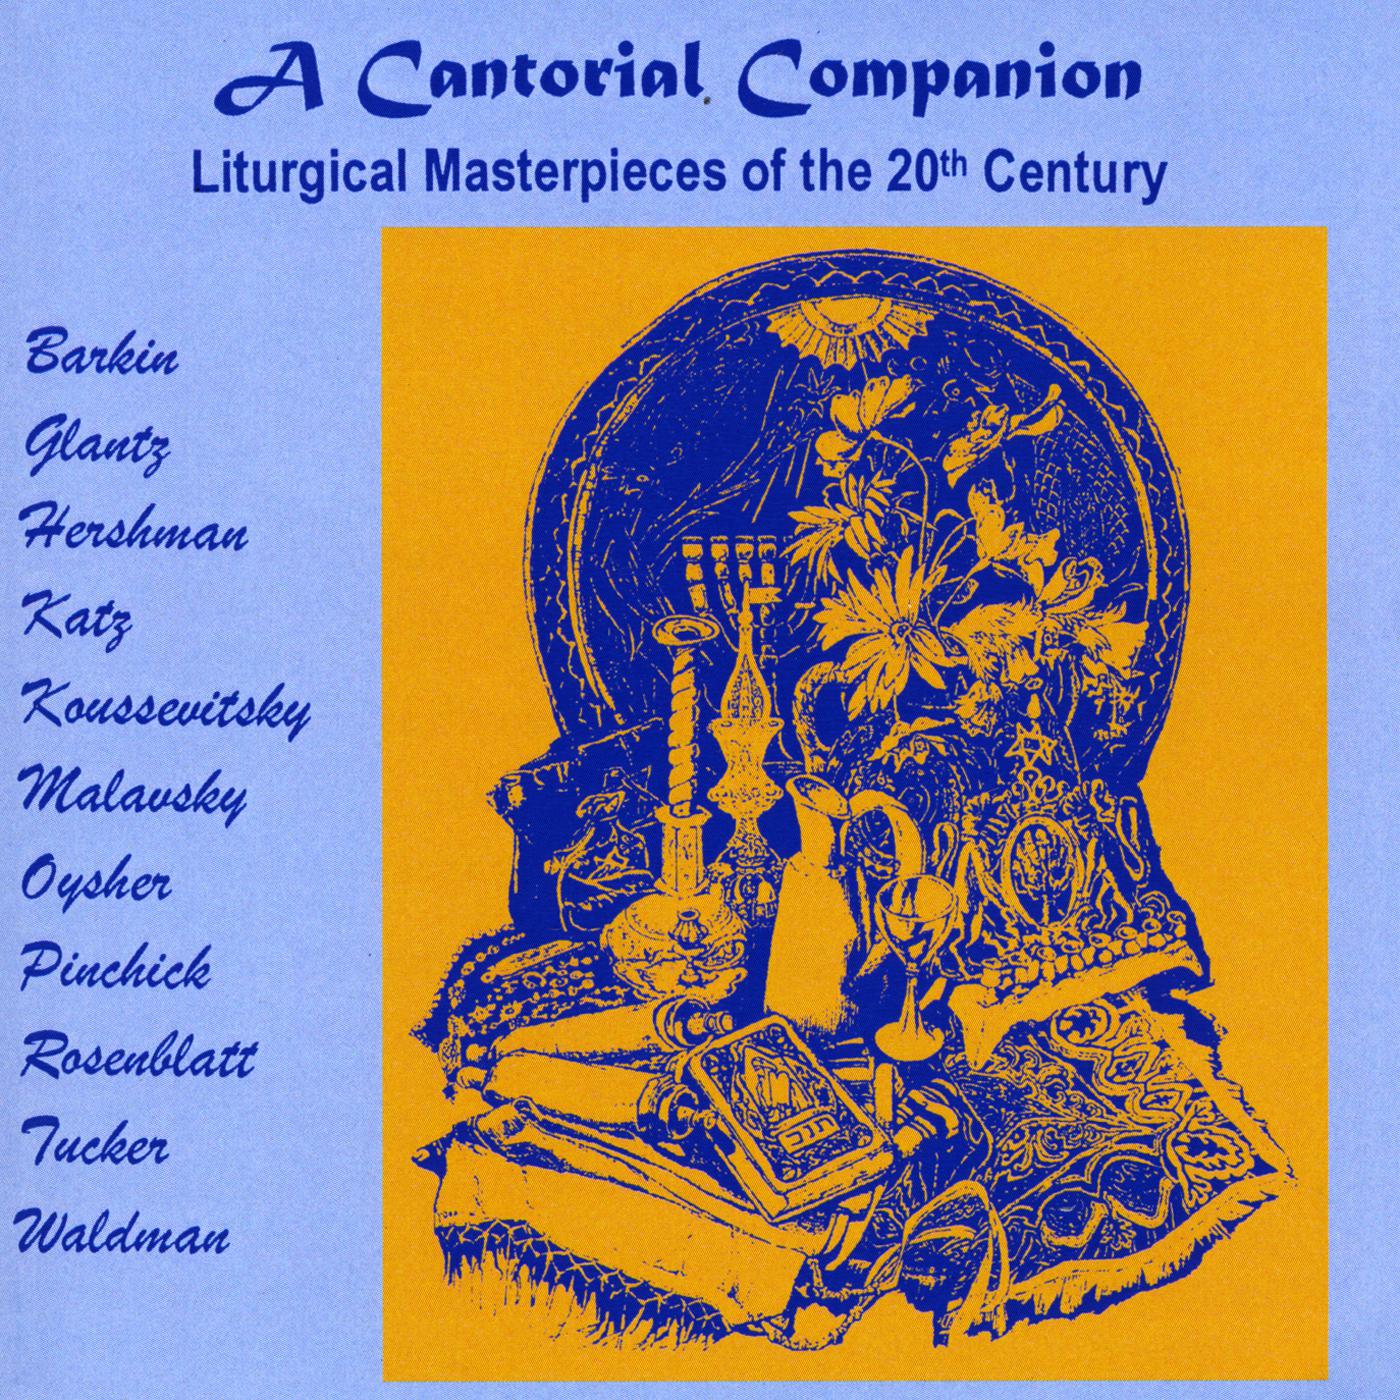 A Cantorial Companion